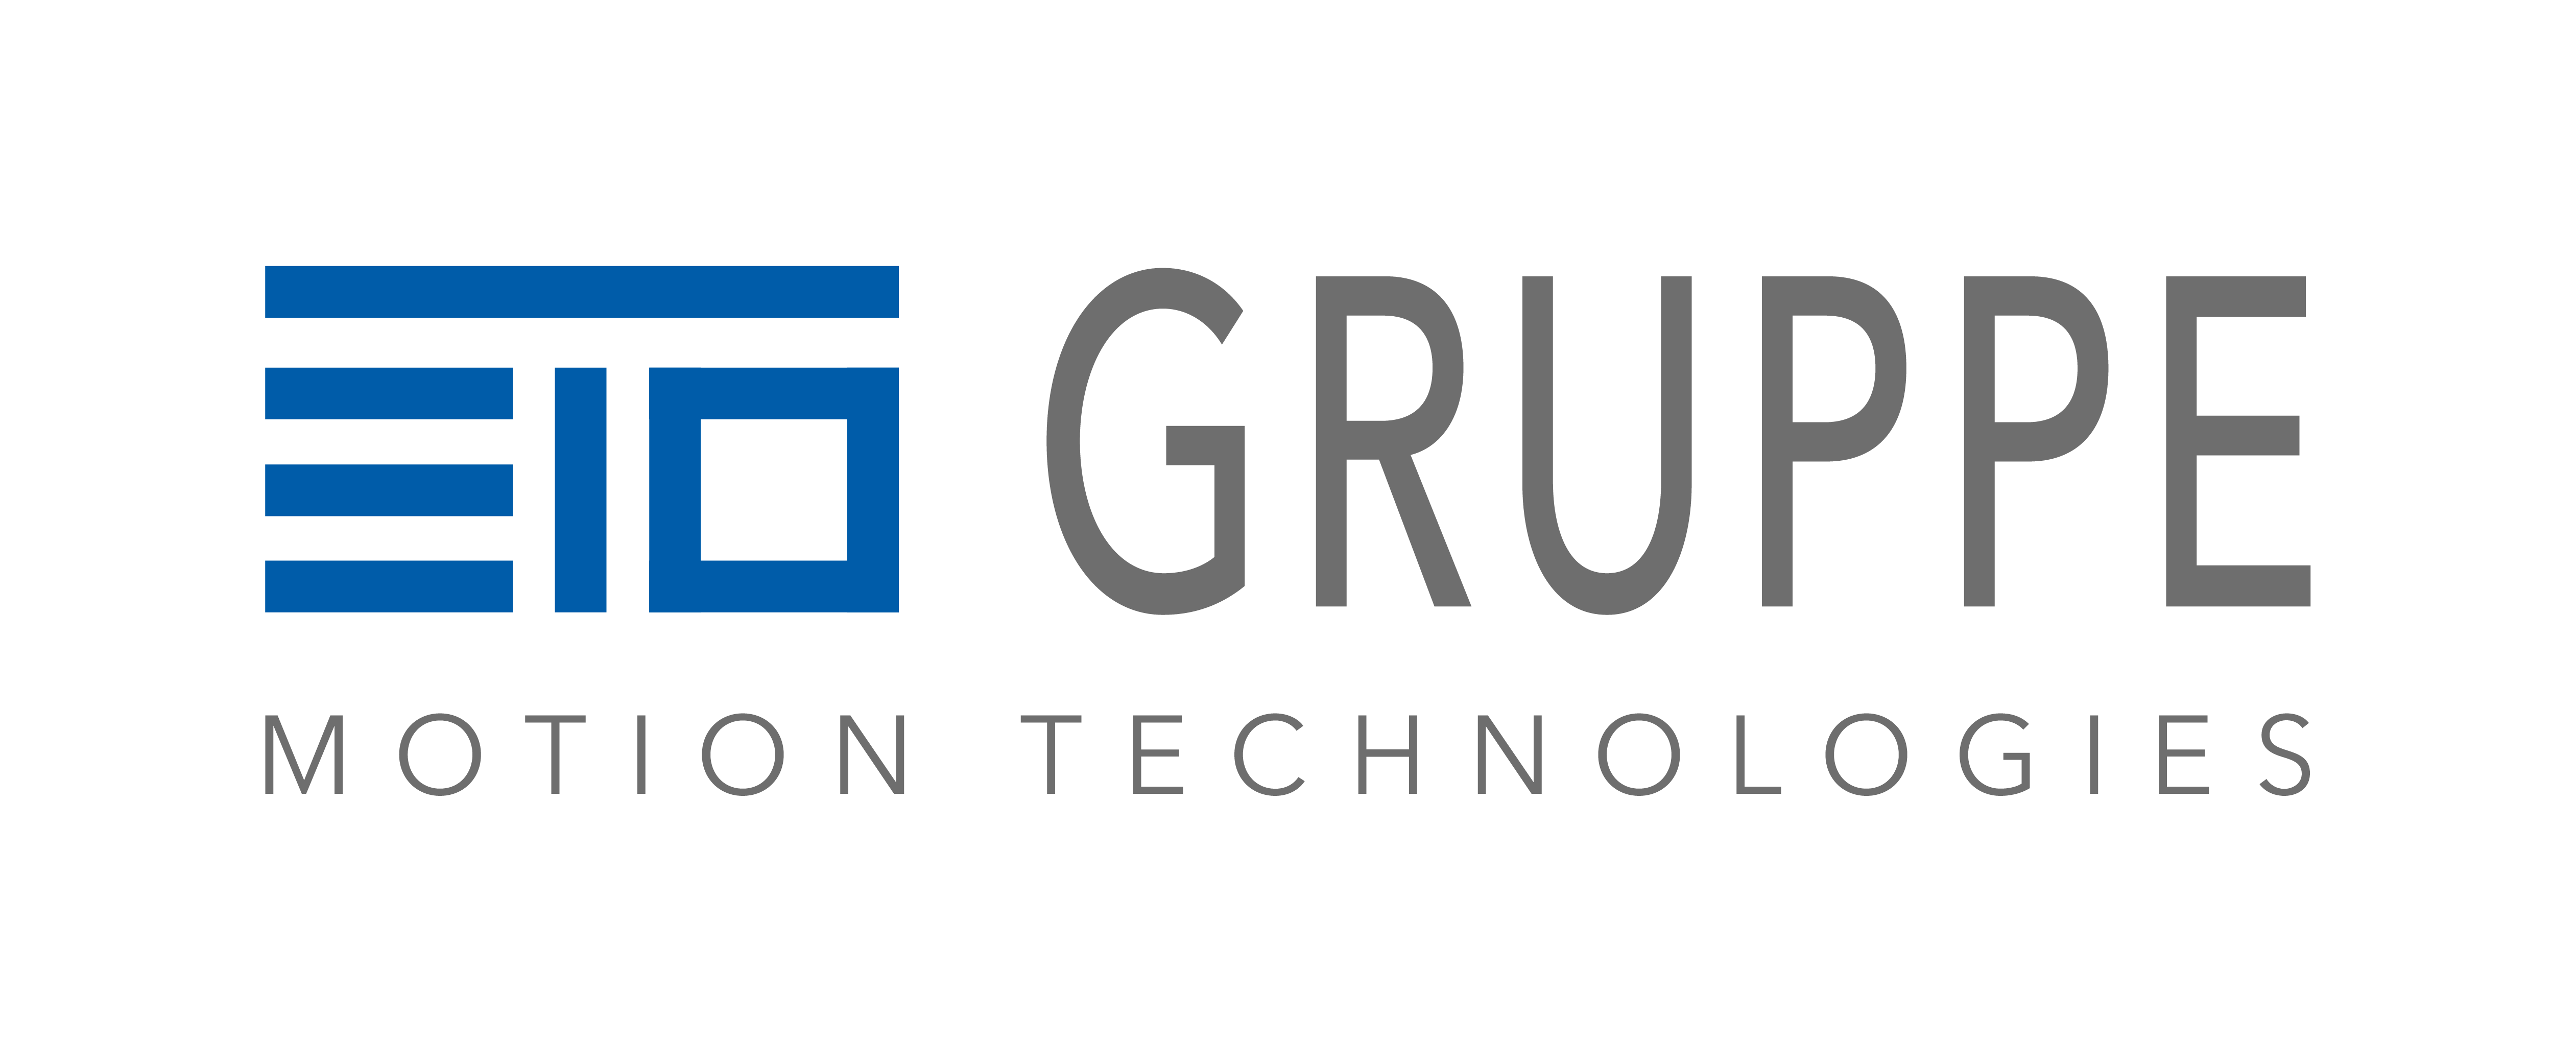 ETO GRUPPE TECHNOLOGIES GmbH